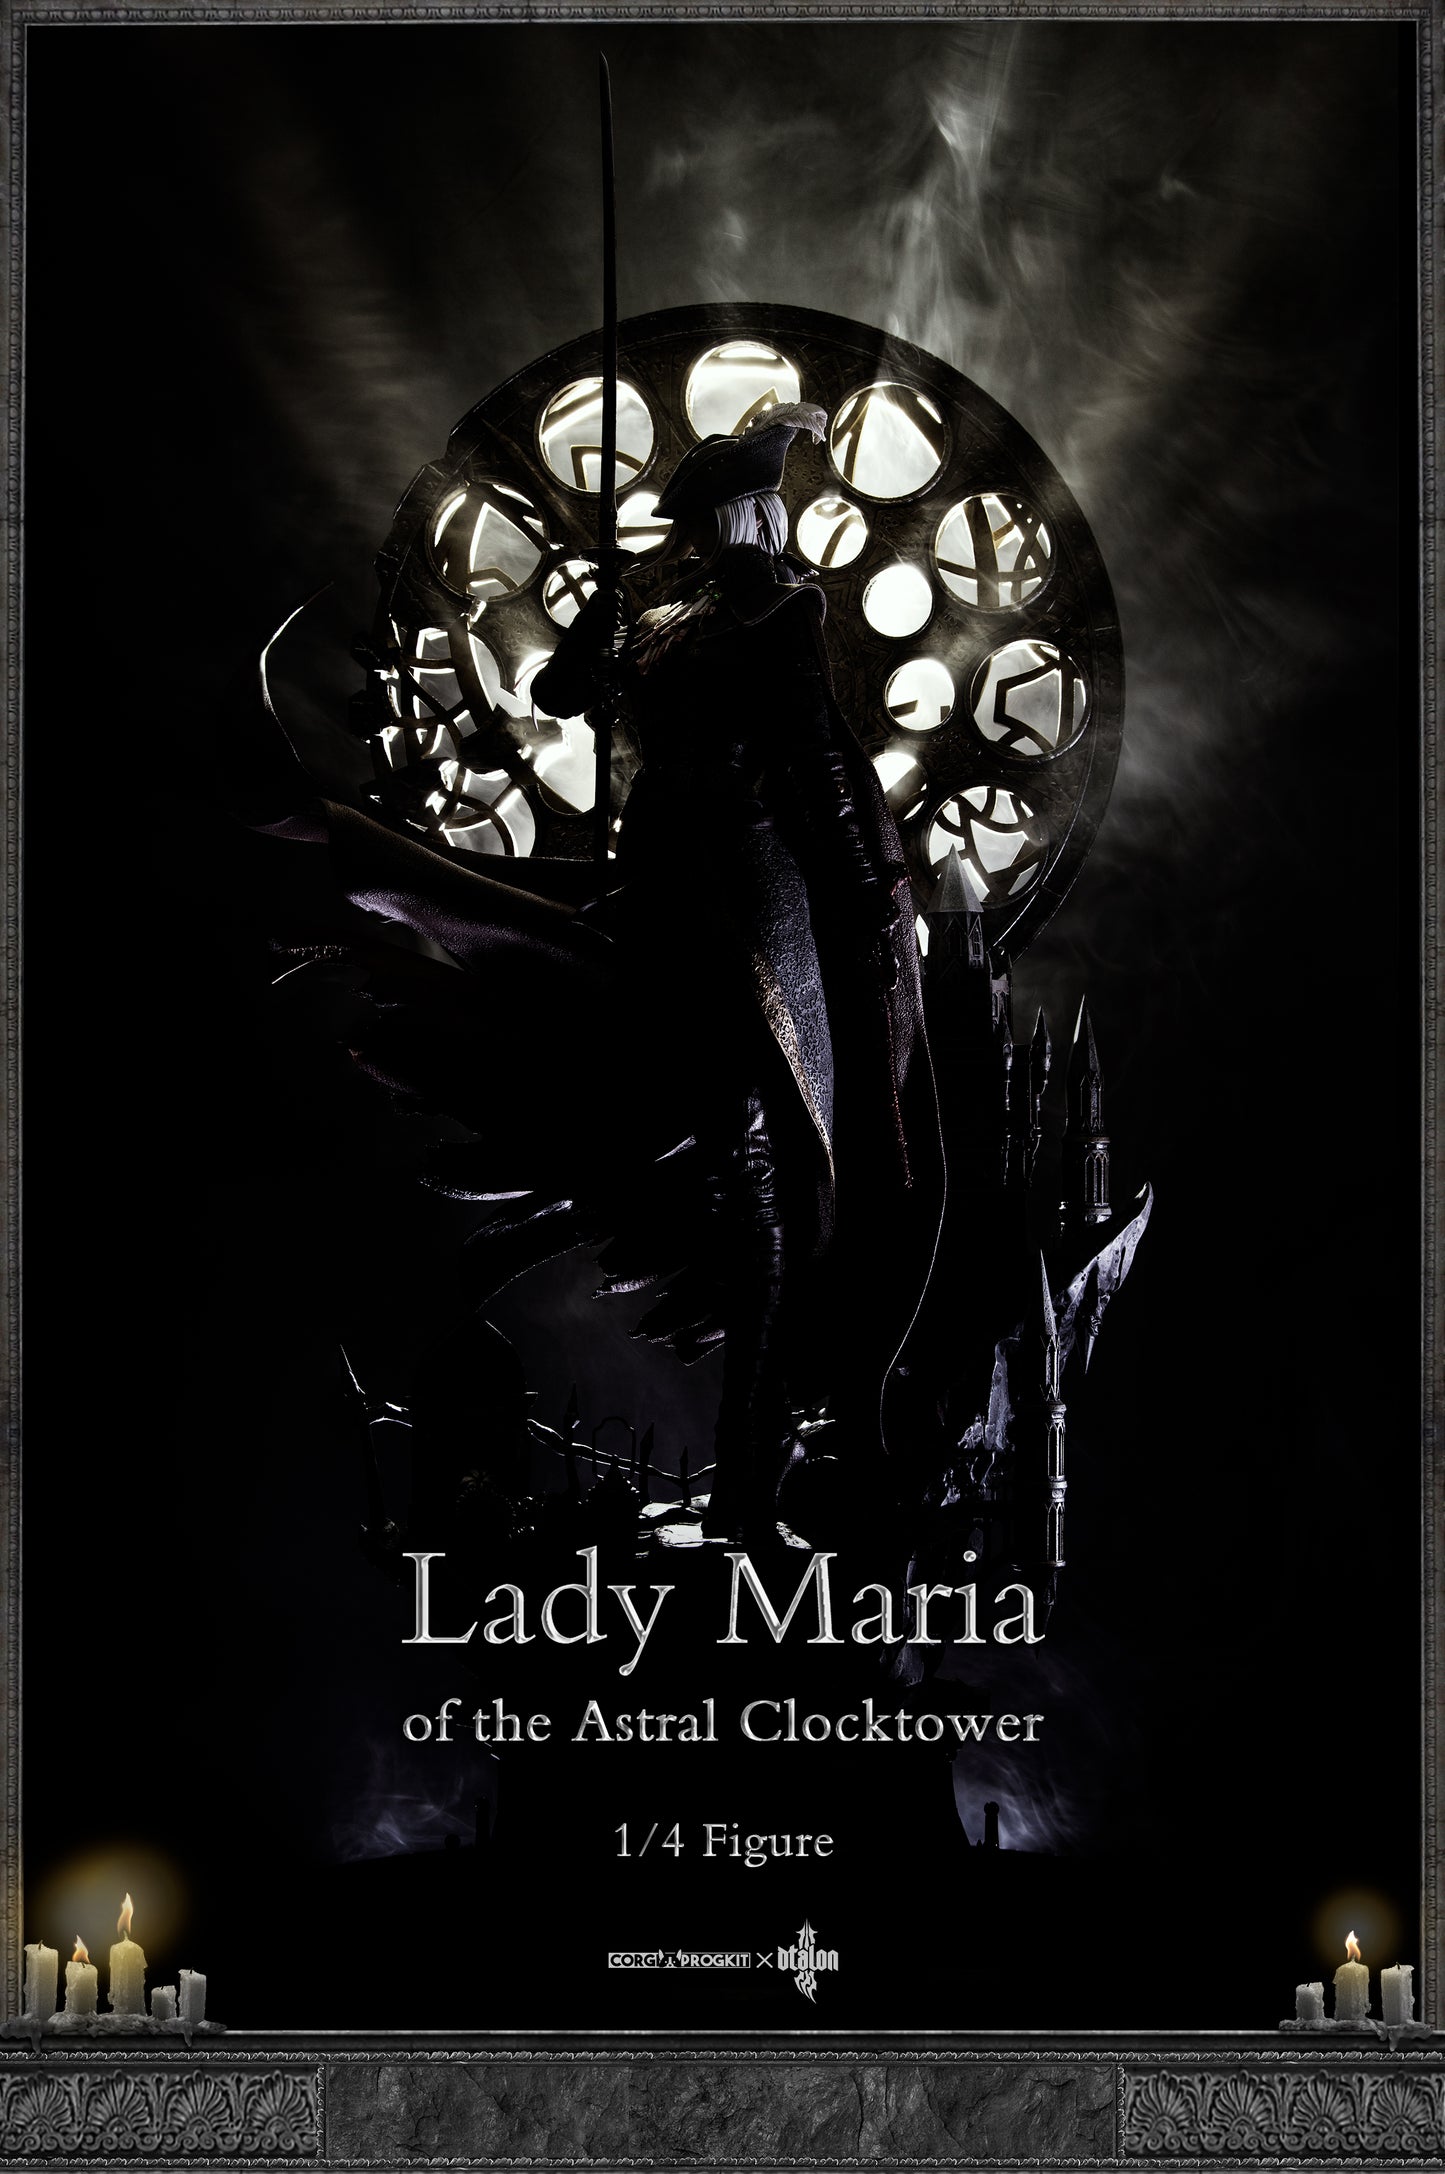 CORGI PROGKIT x DTALON STUDIO – BLOODBORNE: LADY MARIA OF THE ASTRAL CLOCKTOWER [SOLD OUT]